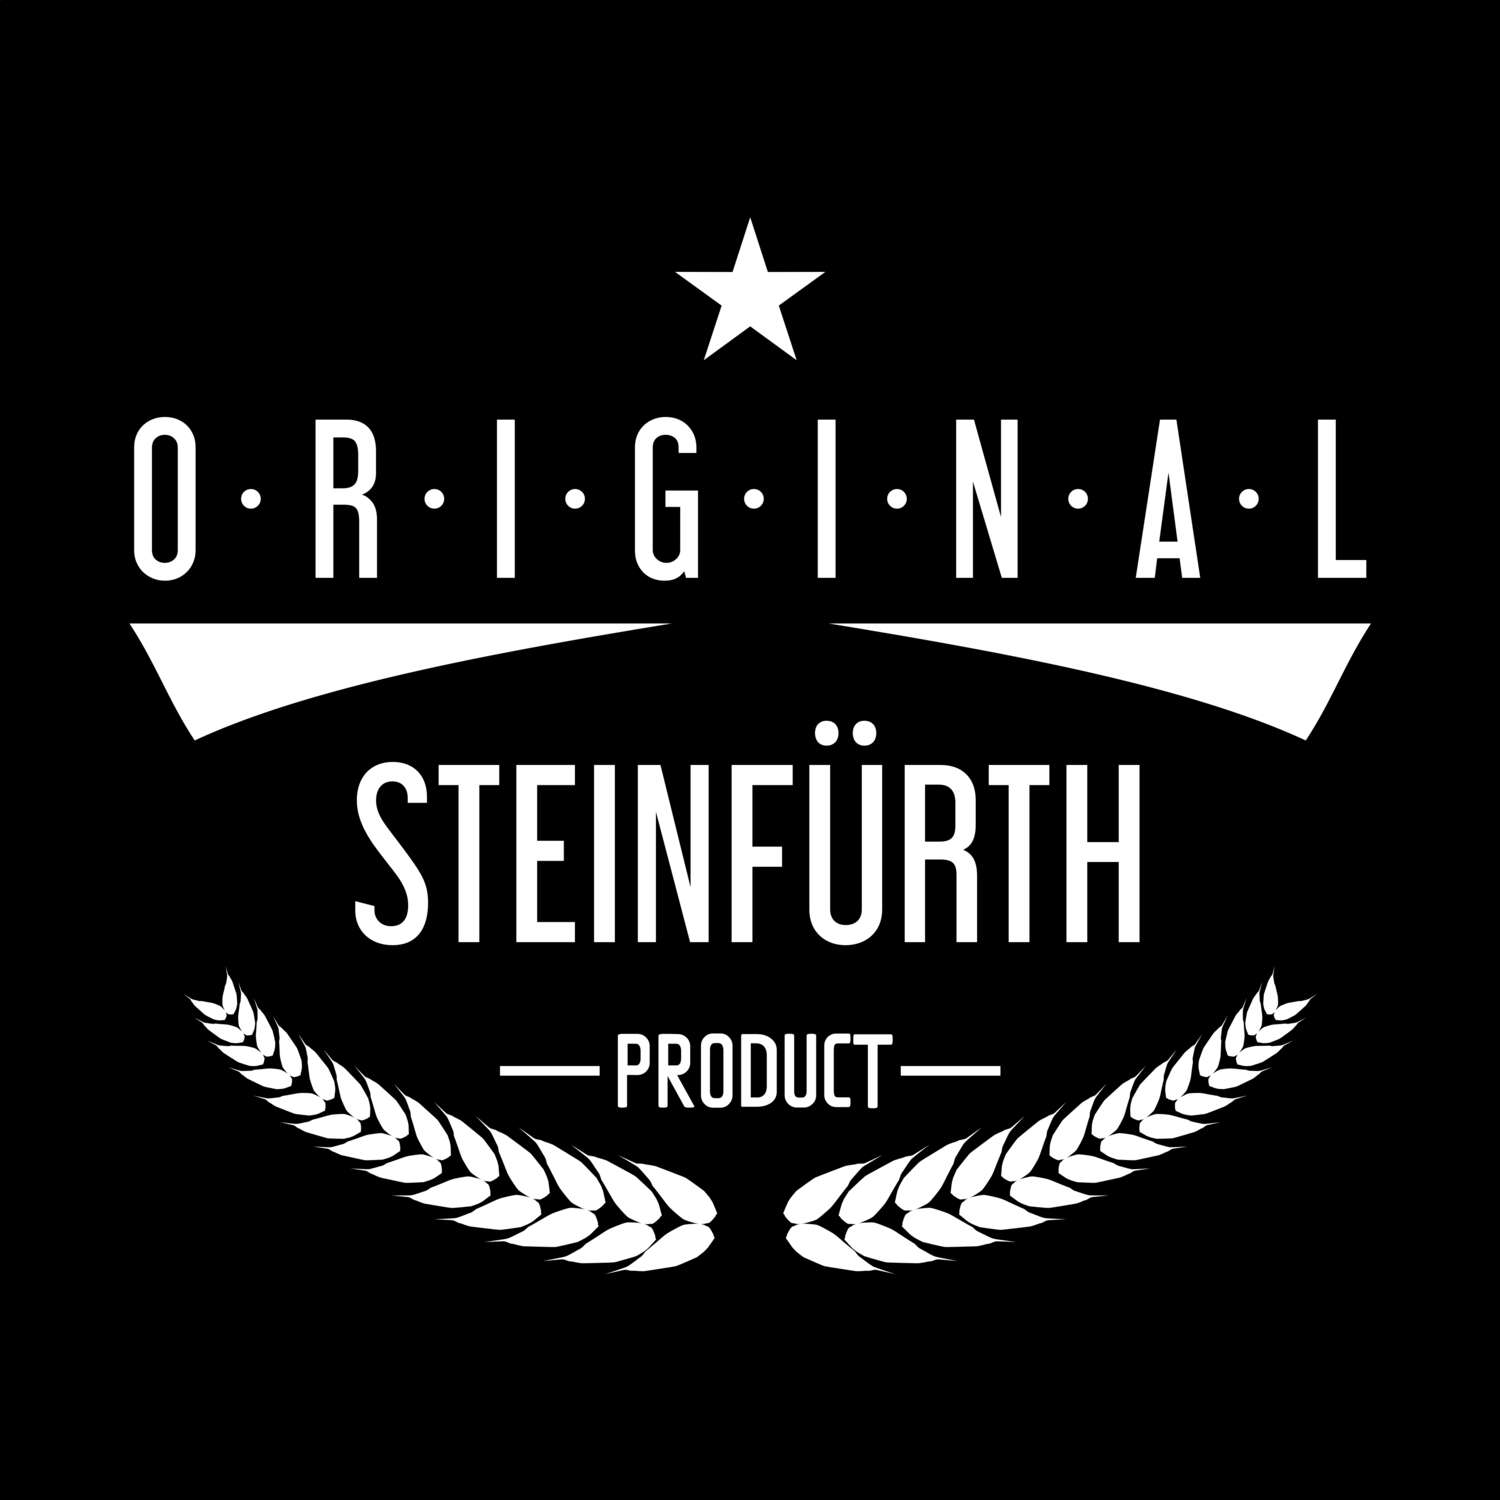 Steinfürth T-Shirt »Original Product«